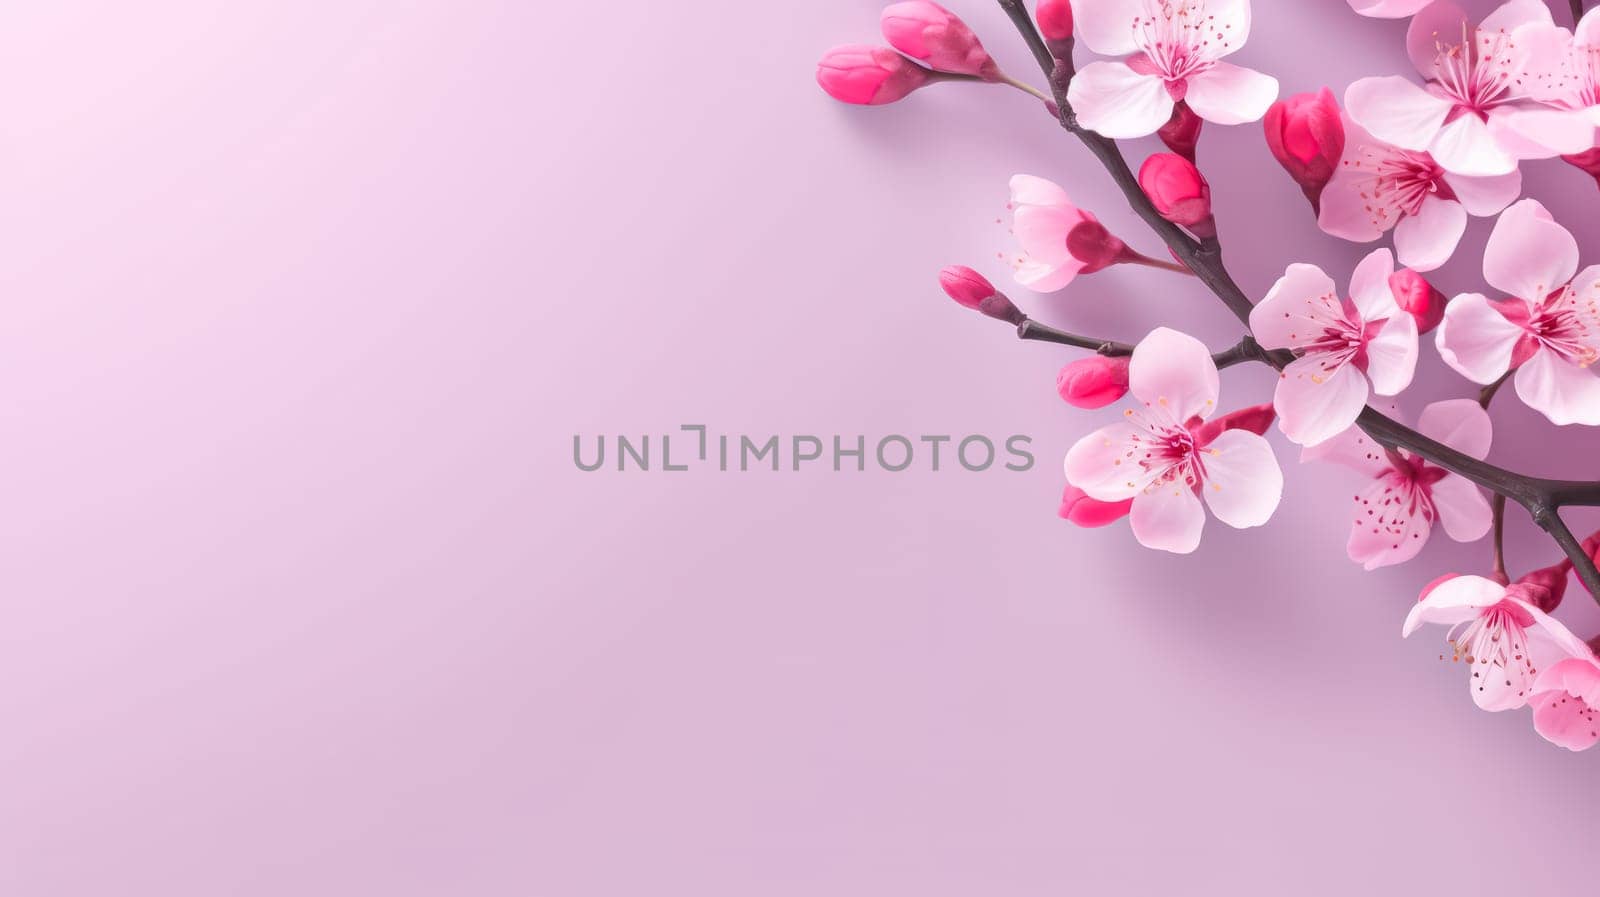 delicate petals unfurling against a colorful backdrop. by Alla_Morozova93